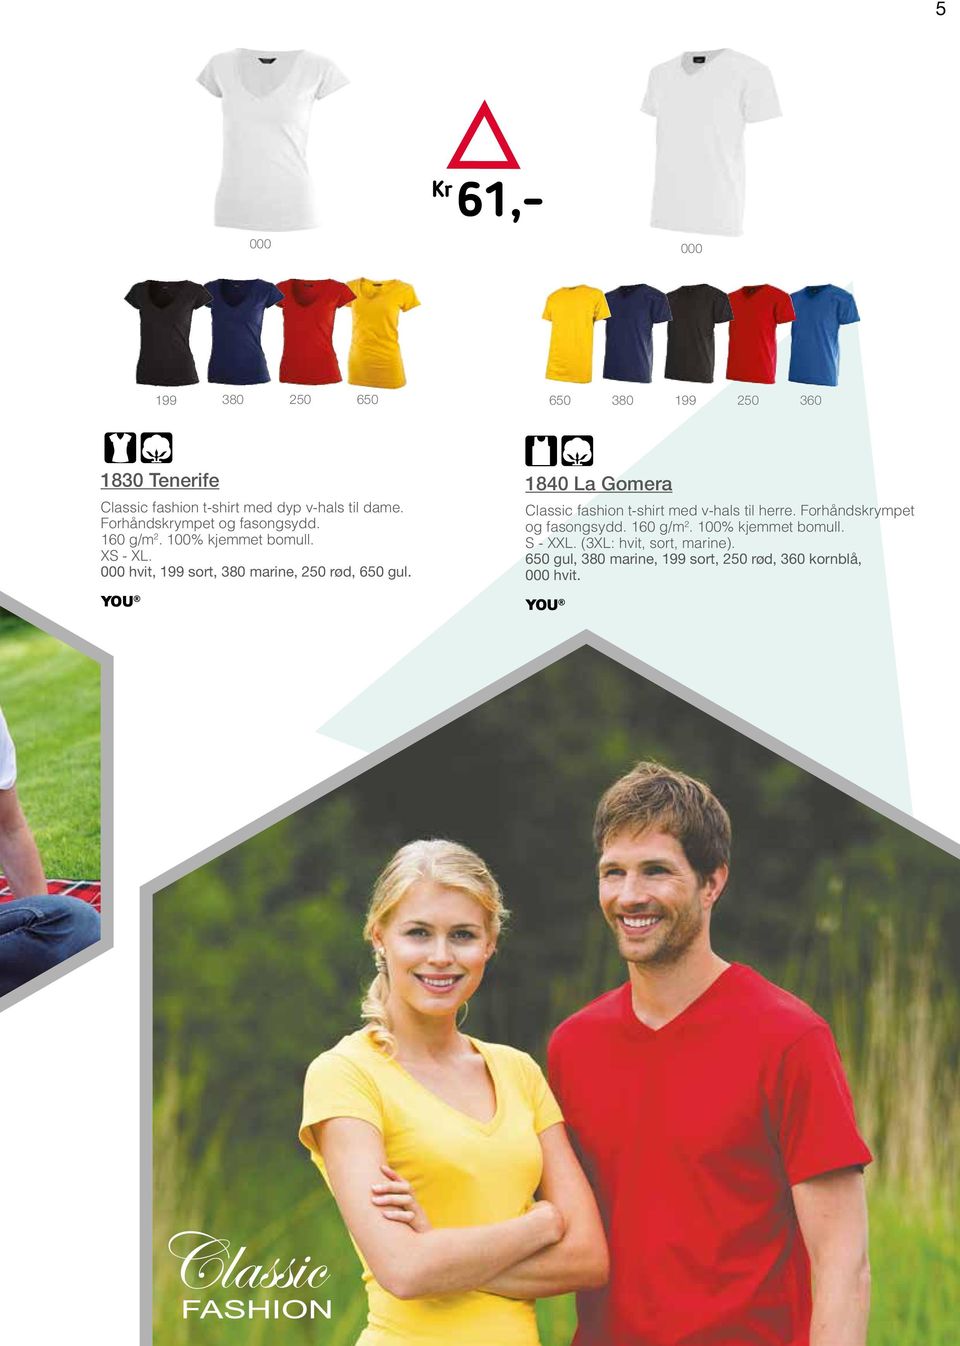 000 hvit, 199 sort, 380 marine, 250 rød, 650 gul. 1840 La Gomera Classic fashion t-shirt med v-hals til herre.